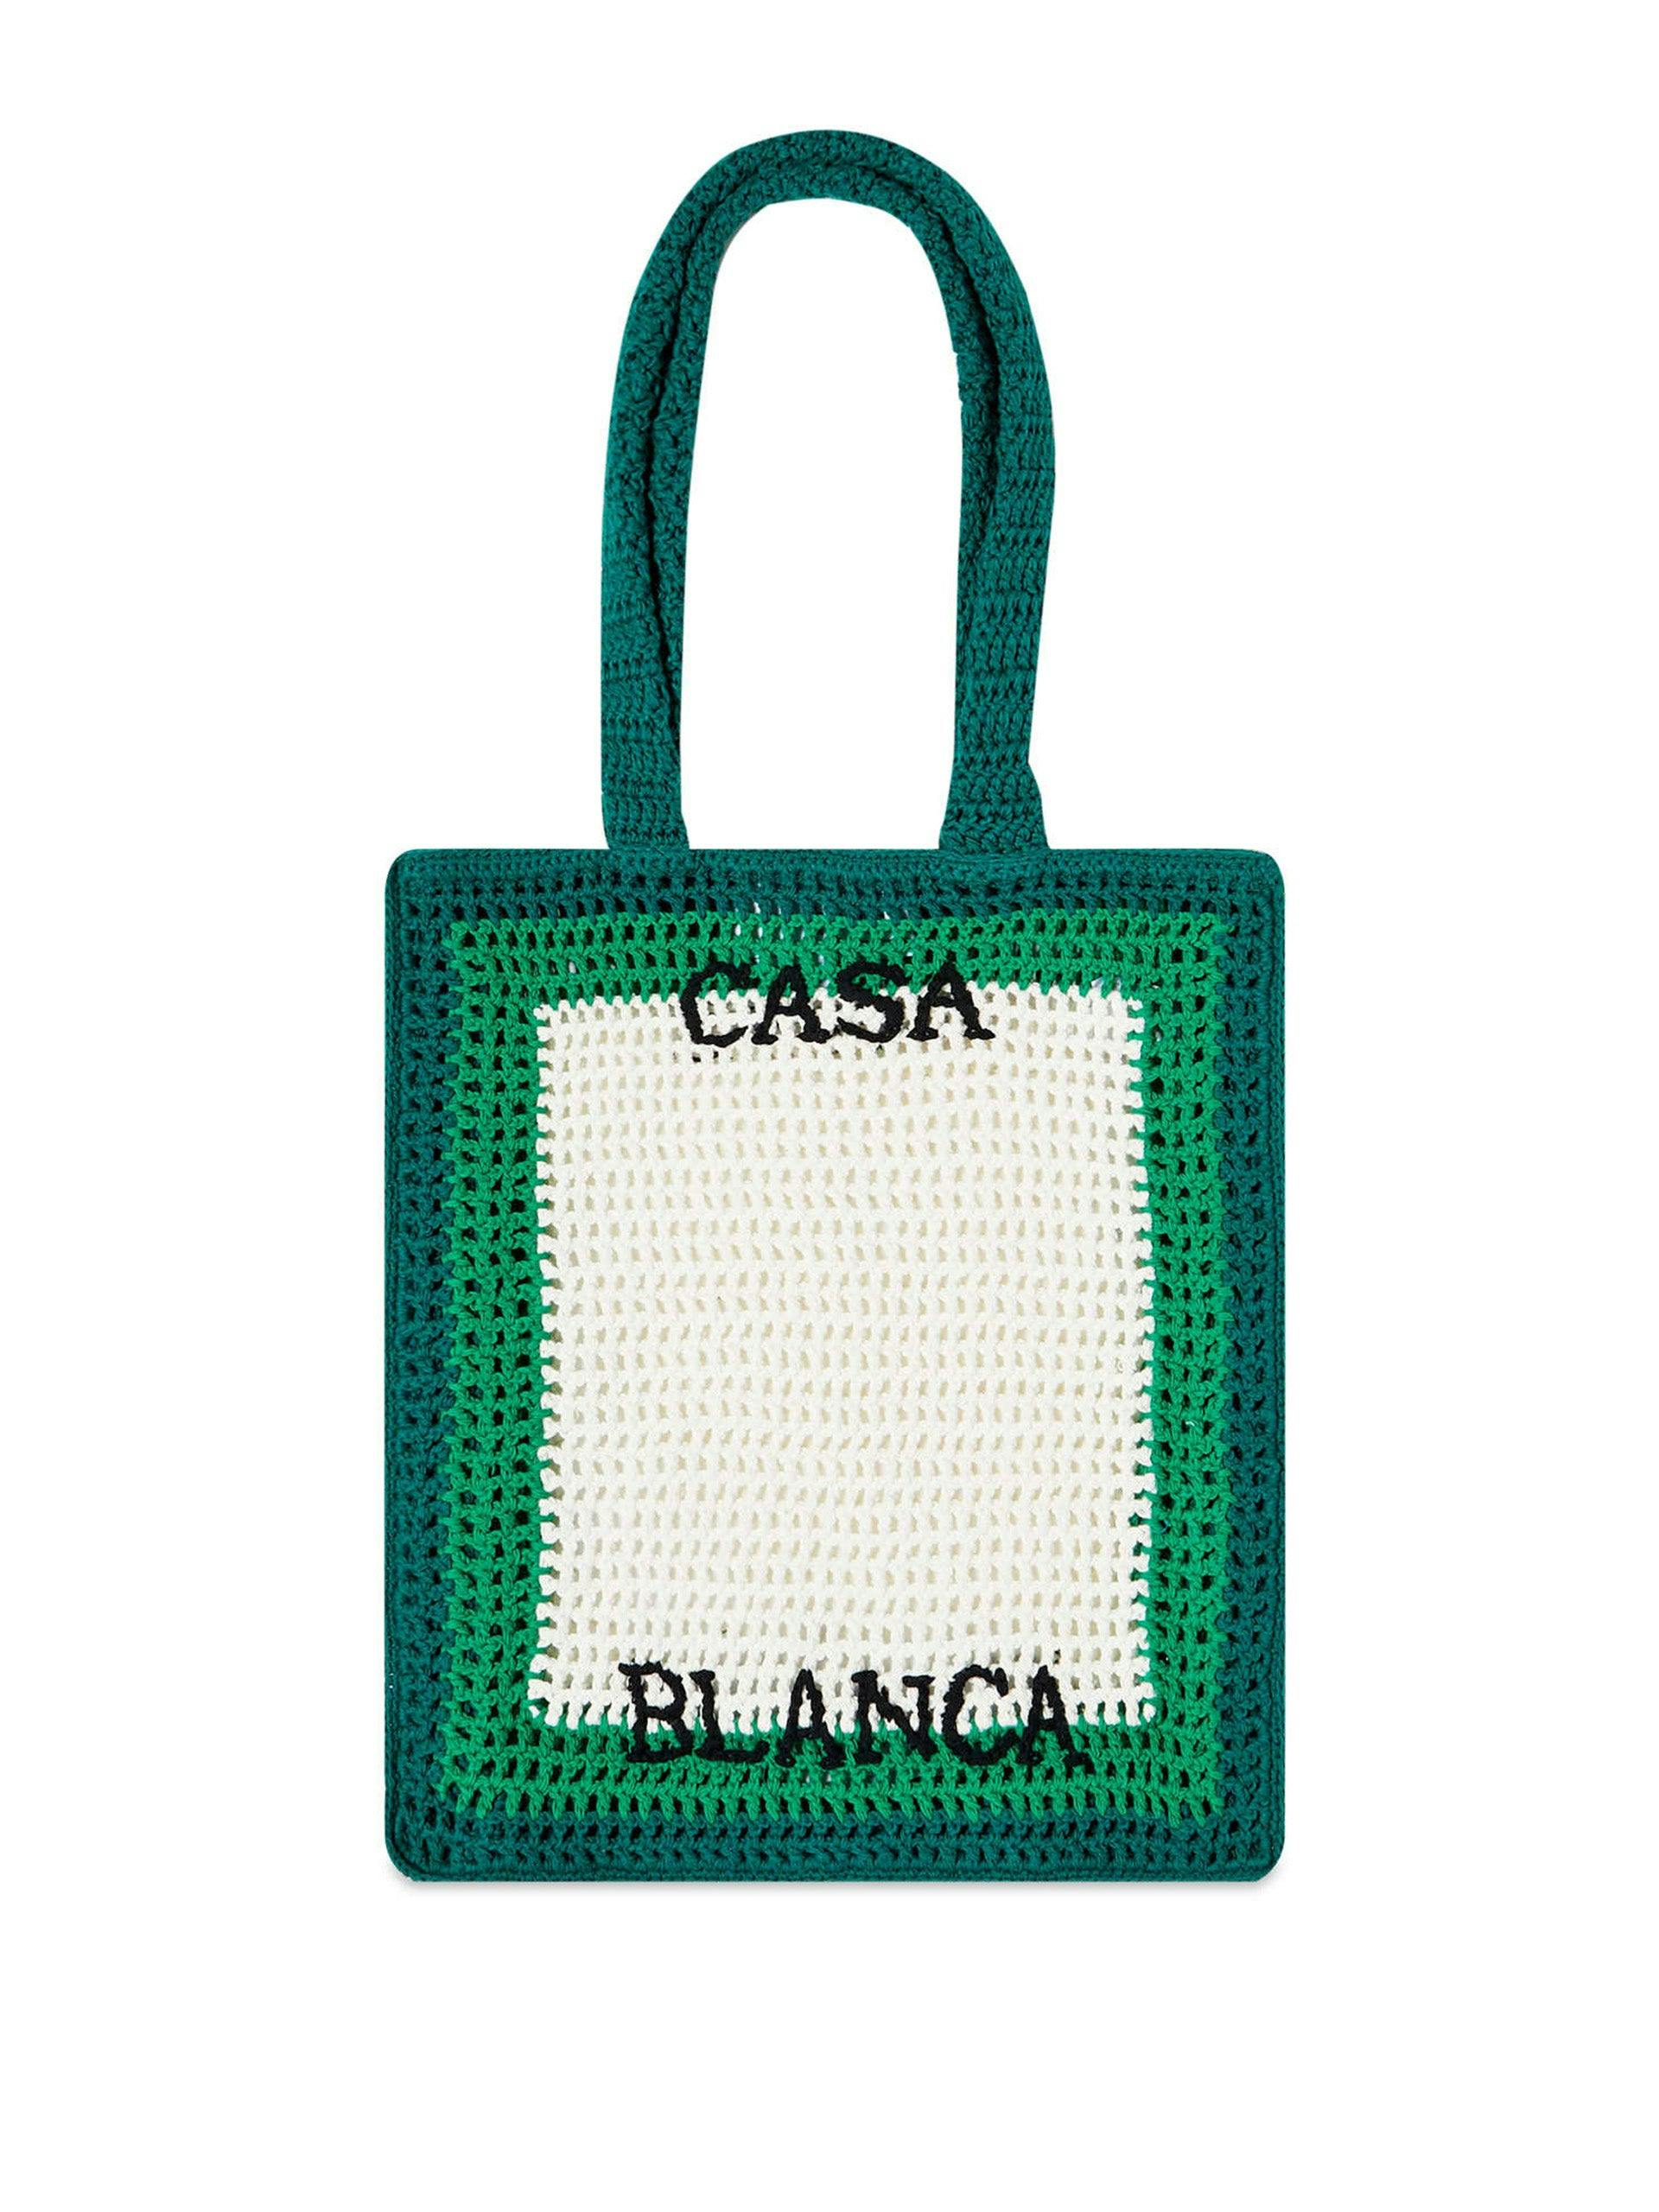 Green and white crochet tennis bag